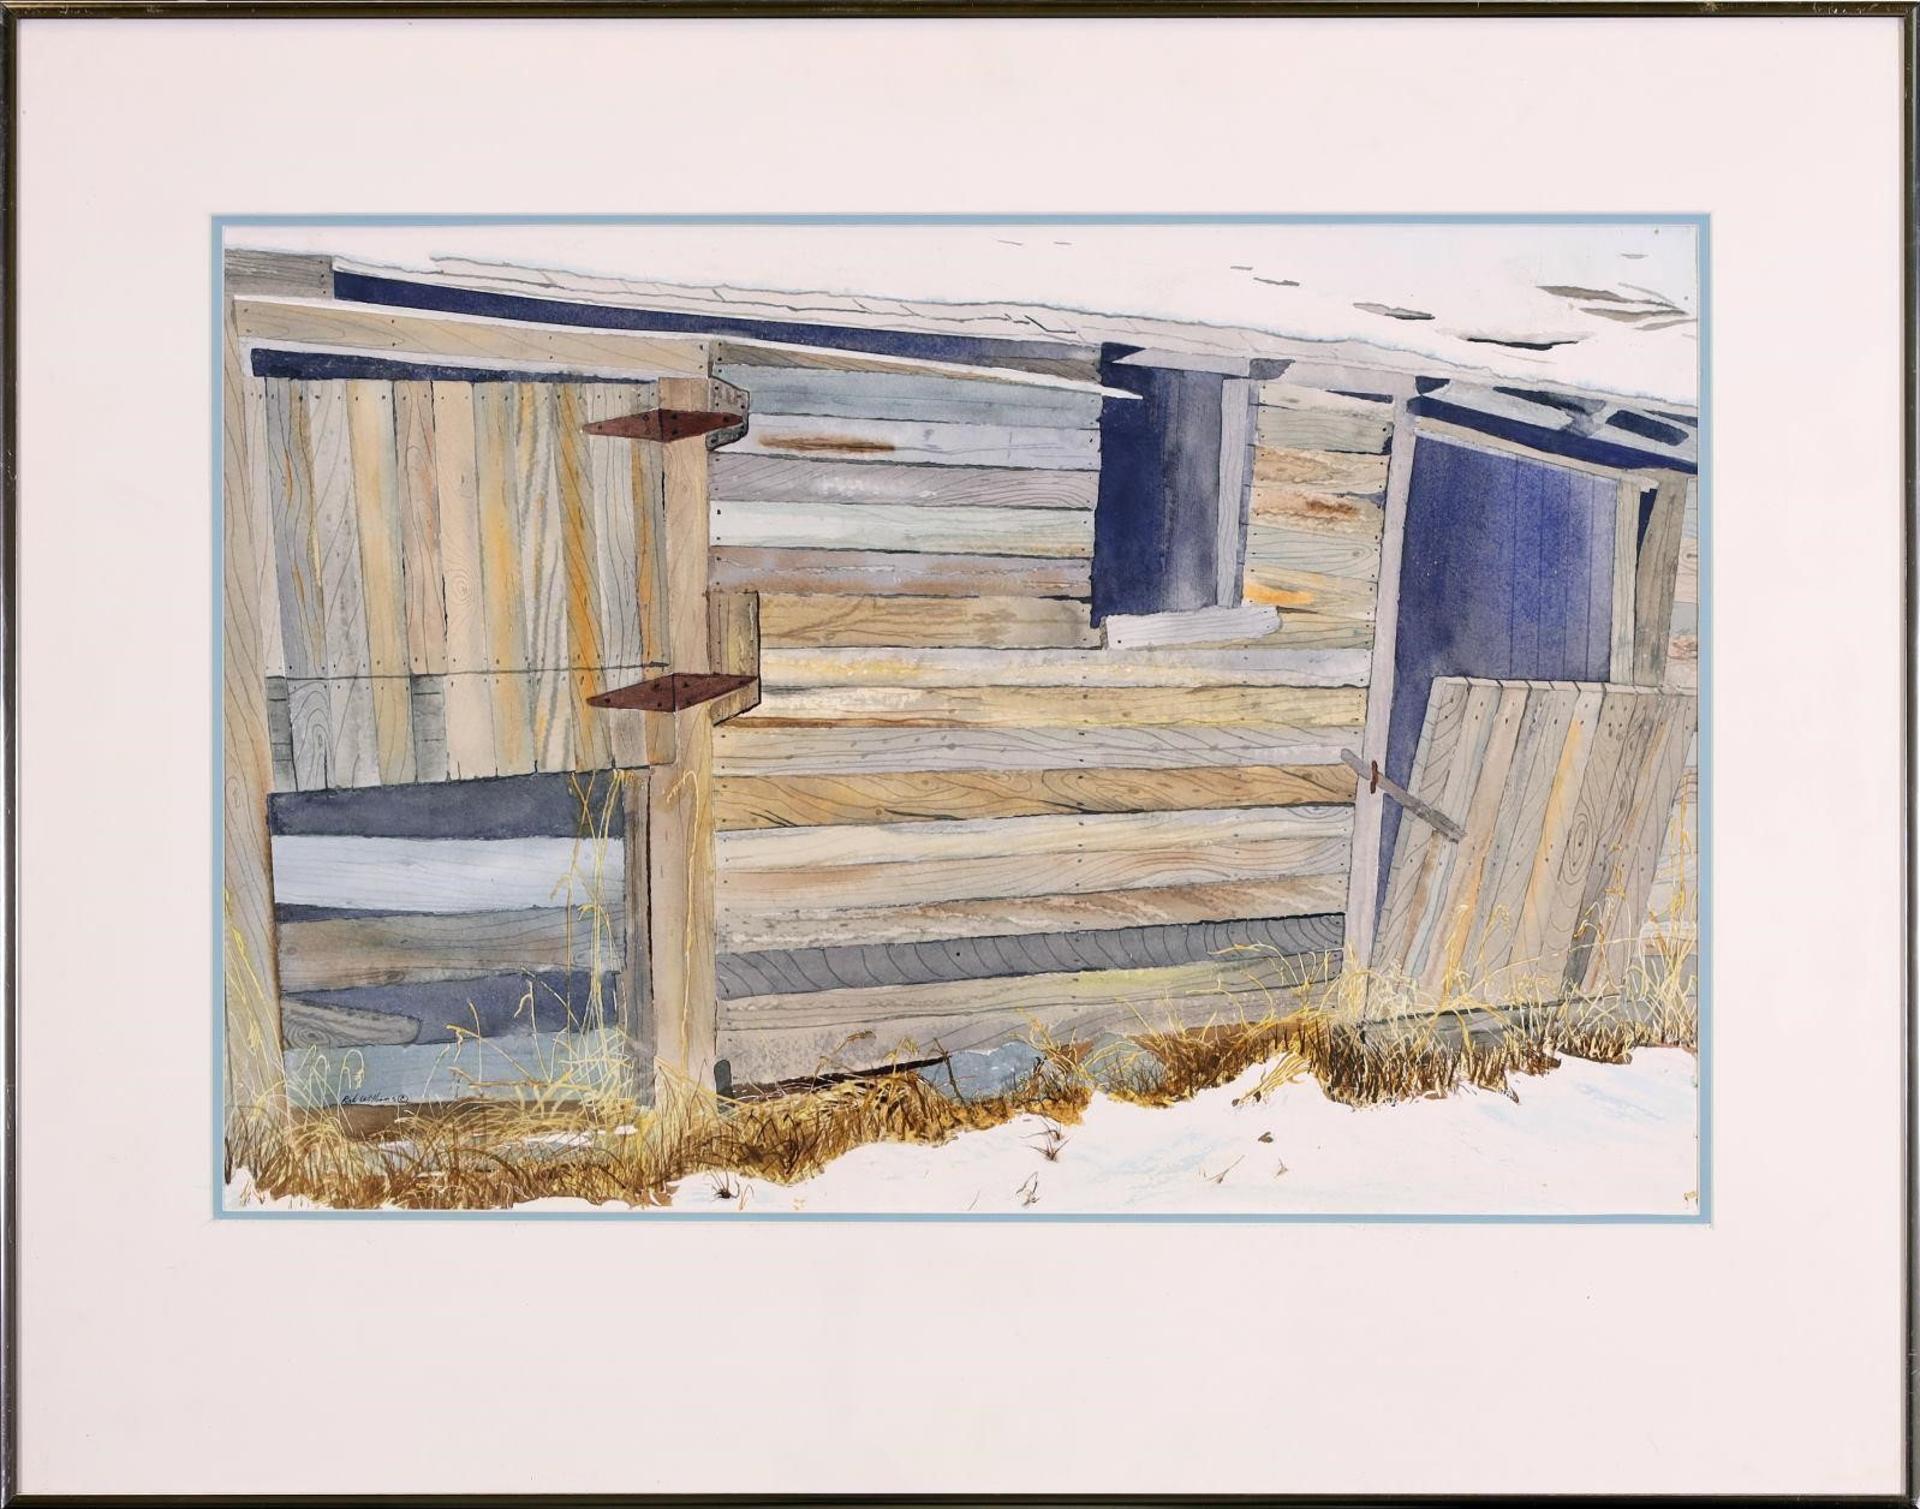 Rich Williams - Untitled, Winter Barn